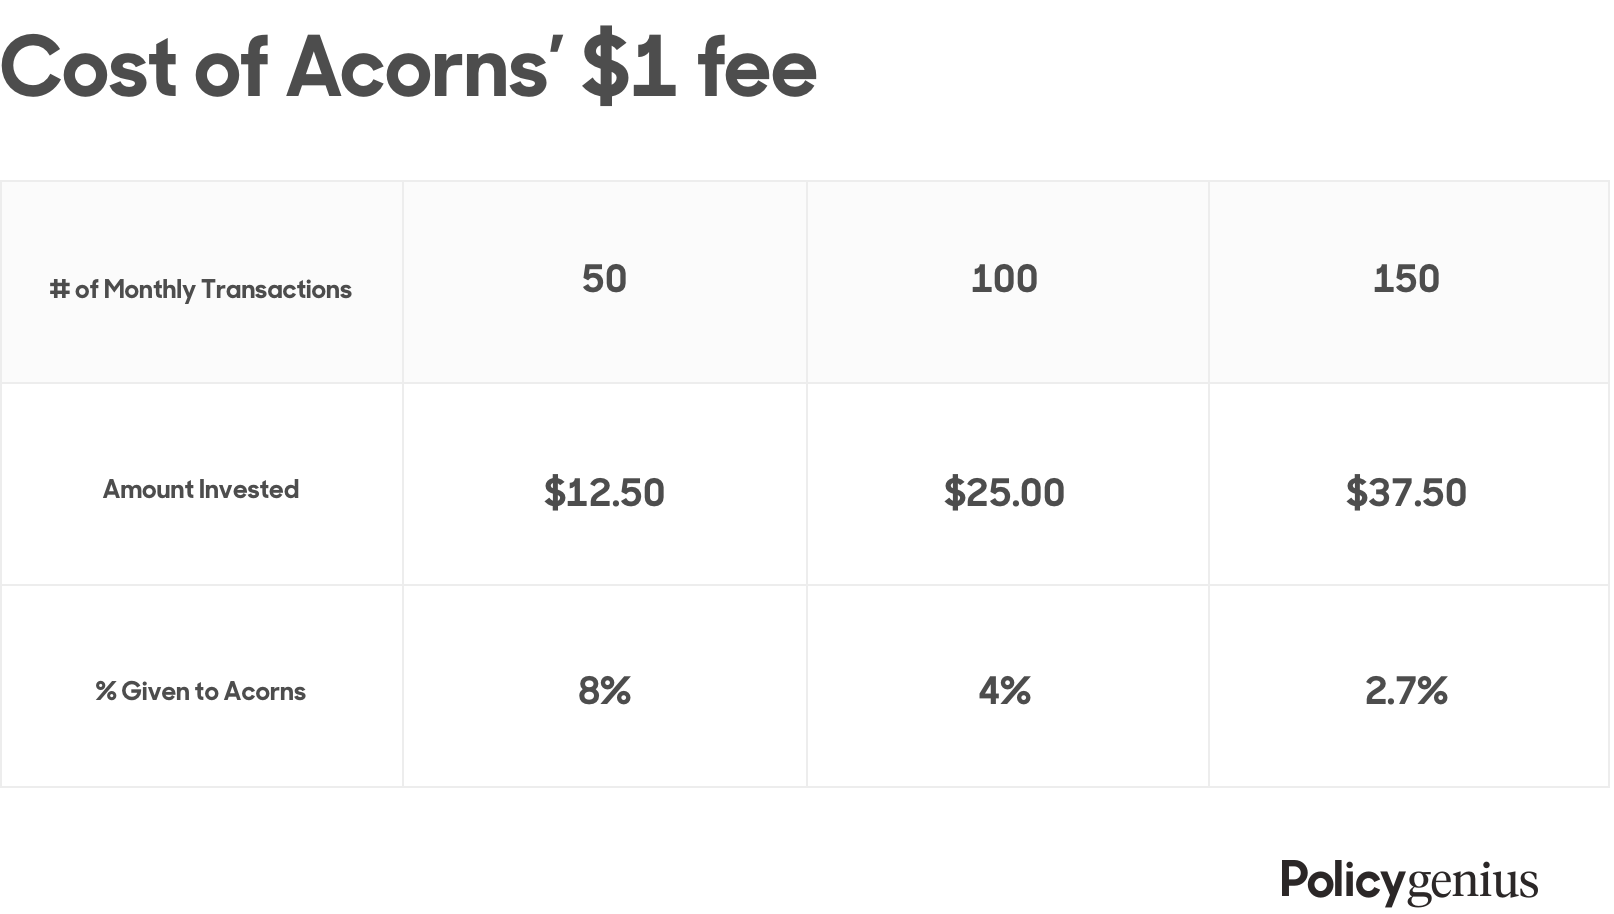 Acorns $1 fee